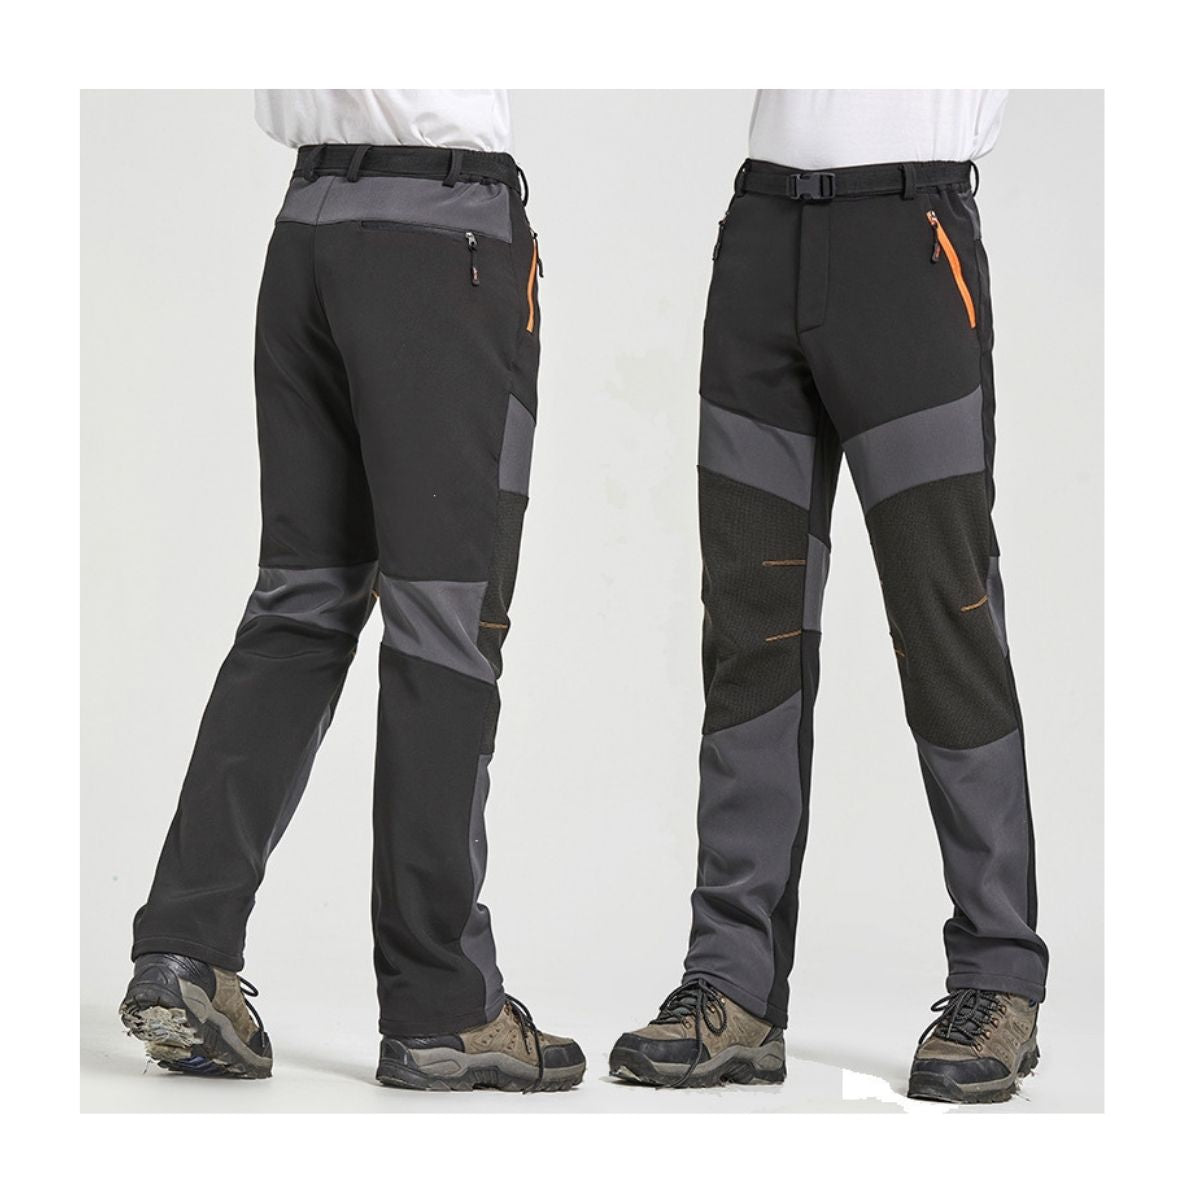 Standard Water Resistant Pants. Nike.com